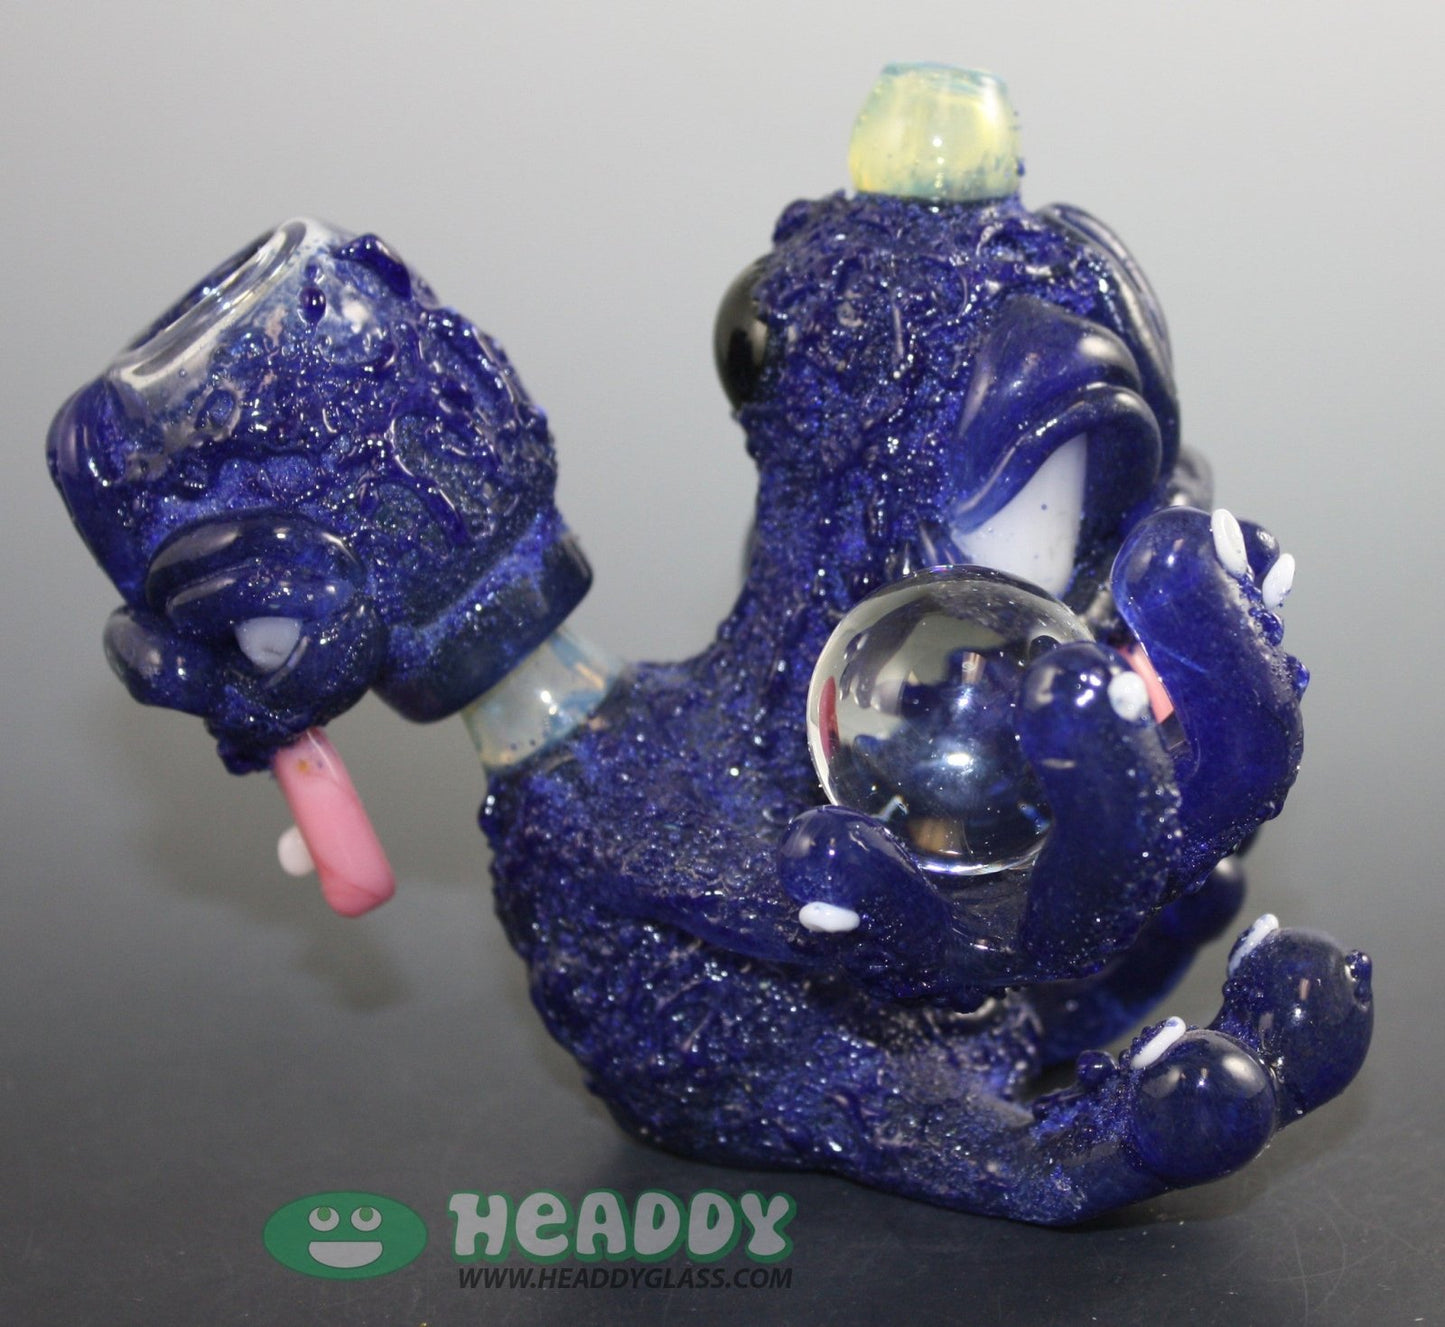 Casto acid eater vapor rig 2 - Headdy Glass